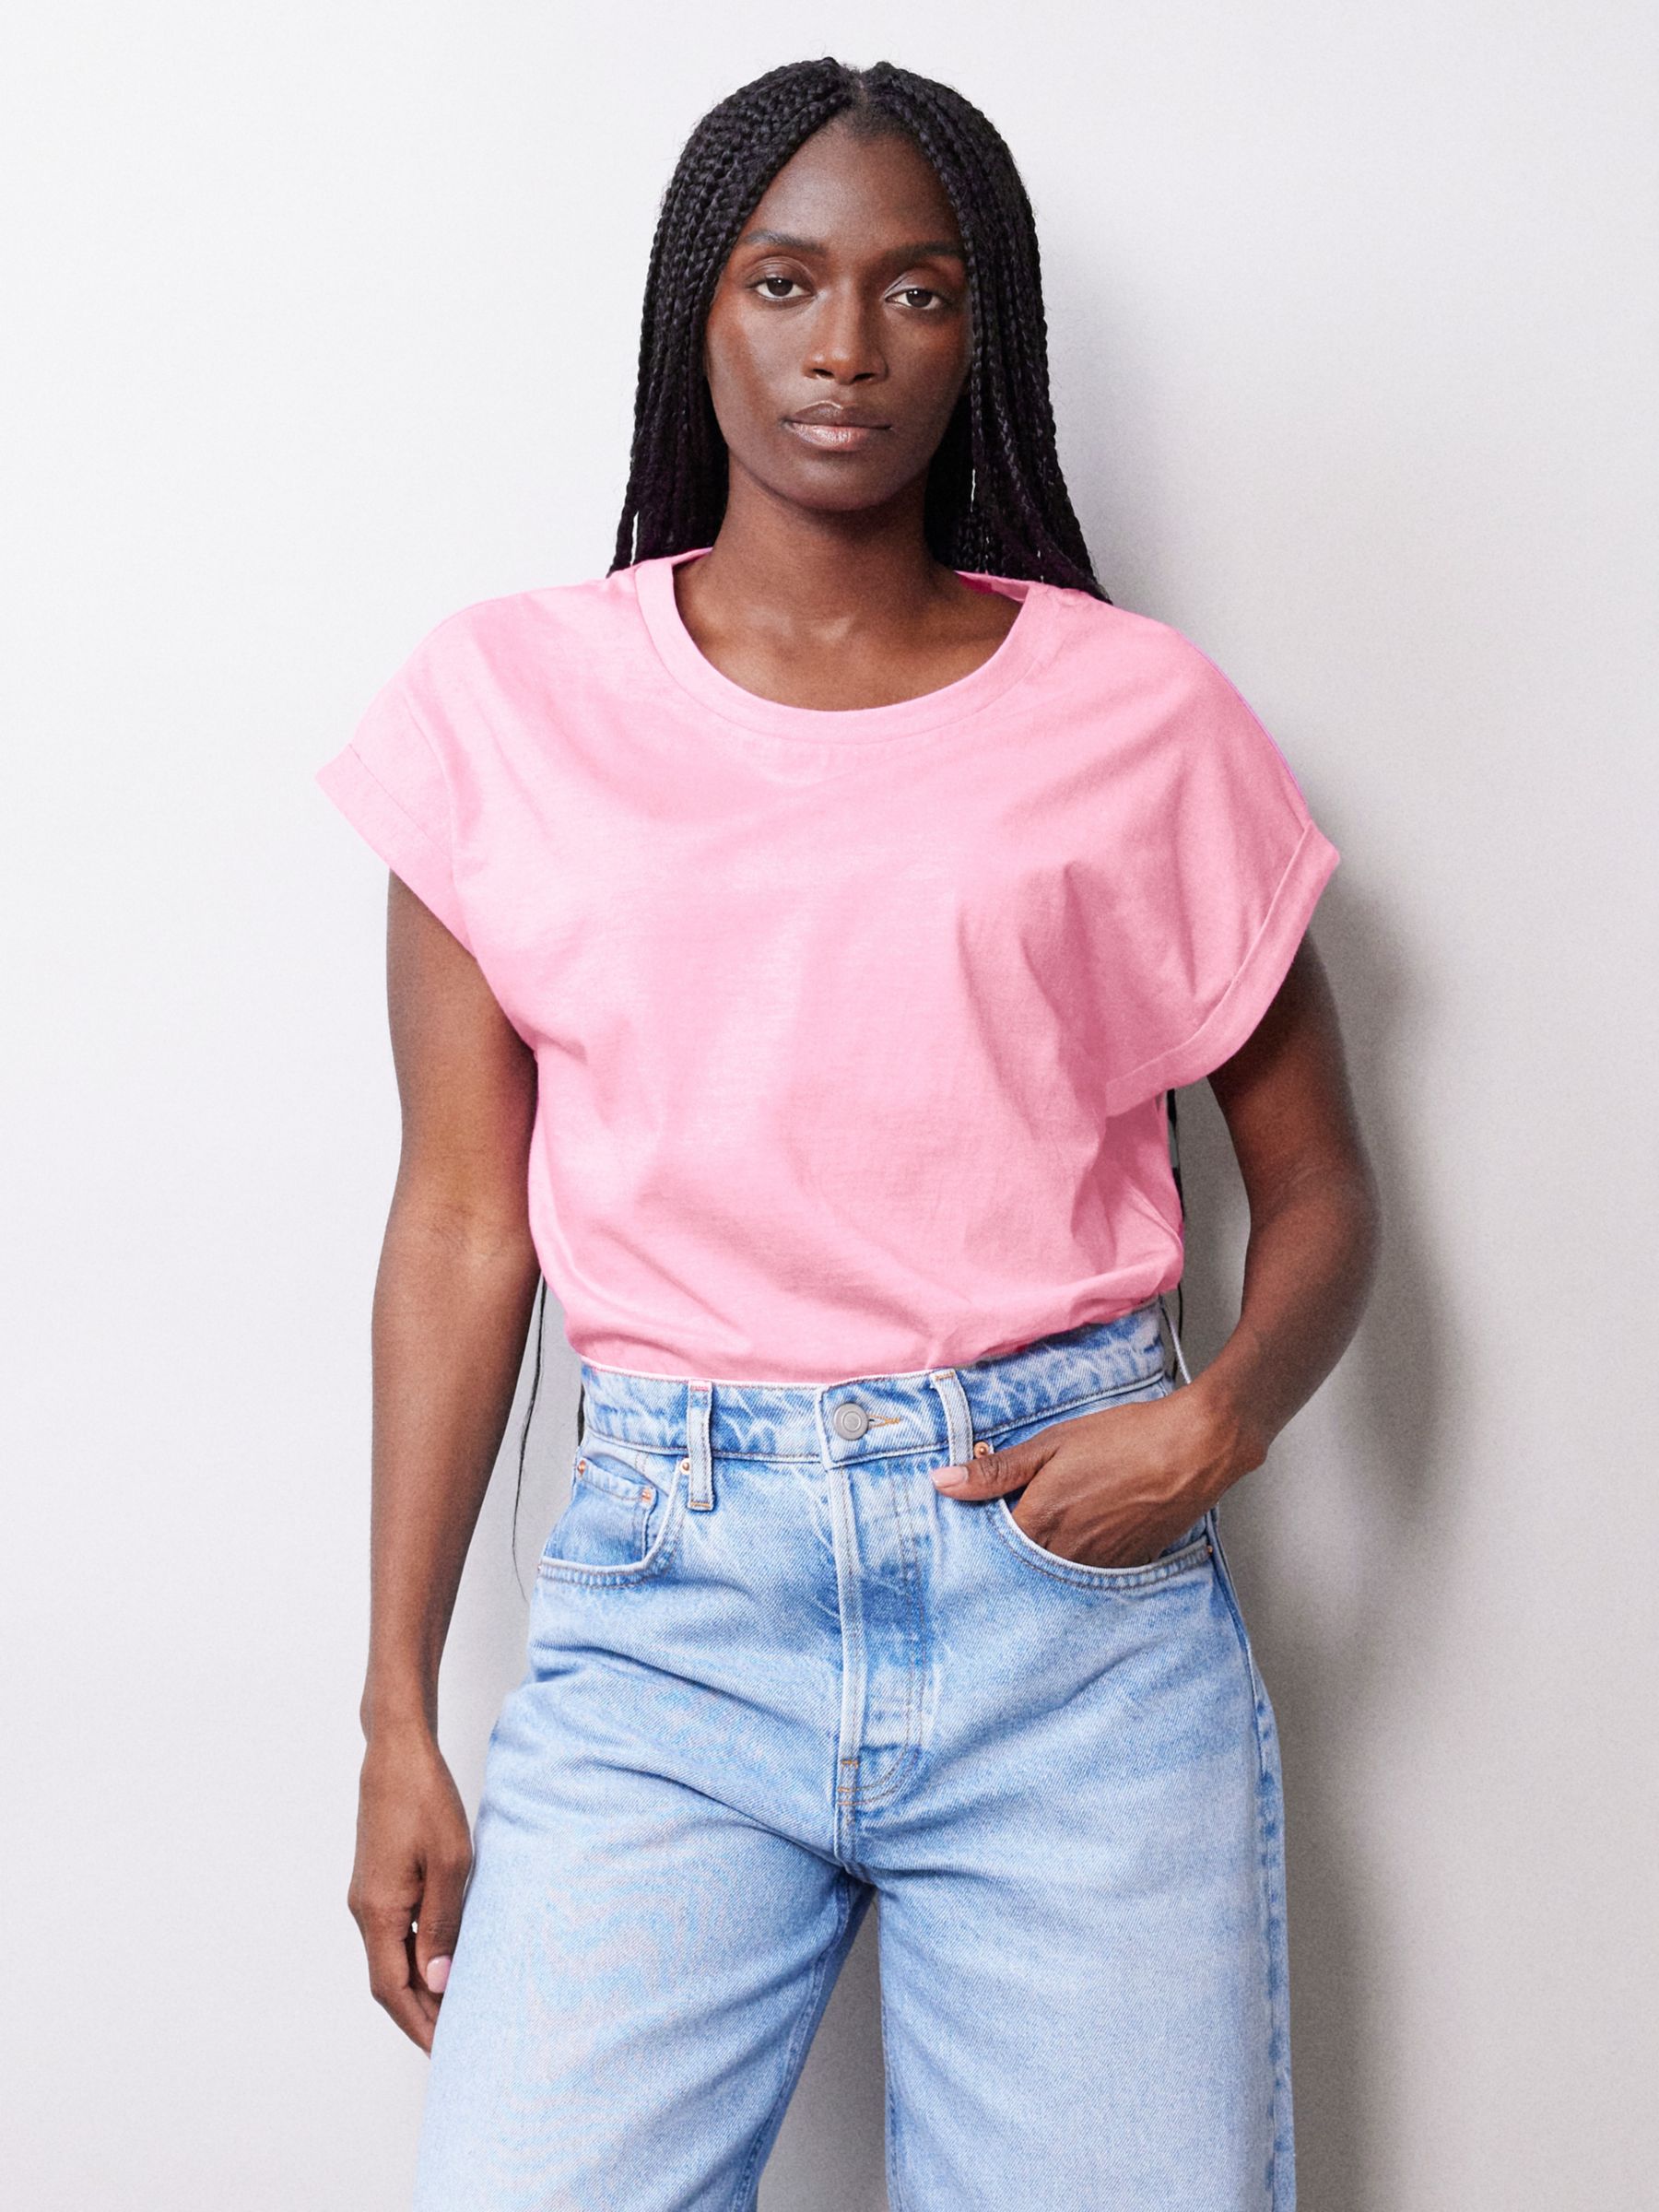 Buy Albaray Roll Back T-Shirt, Pink Online at johnlewis.com